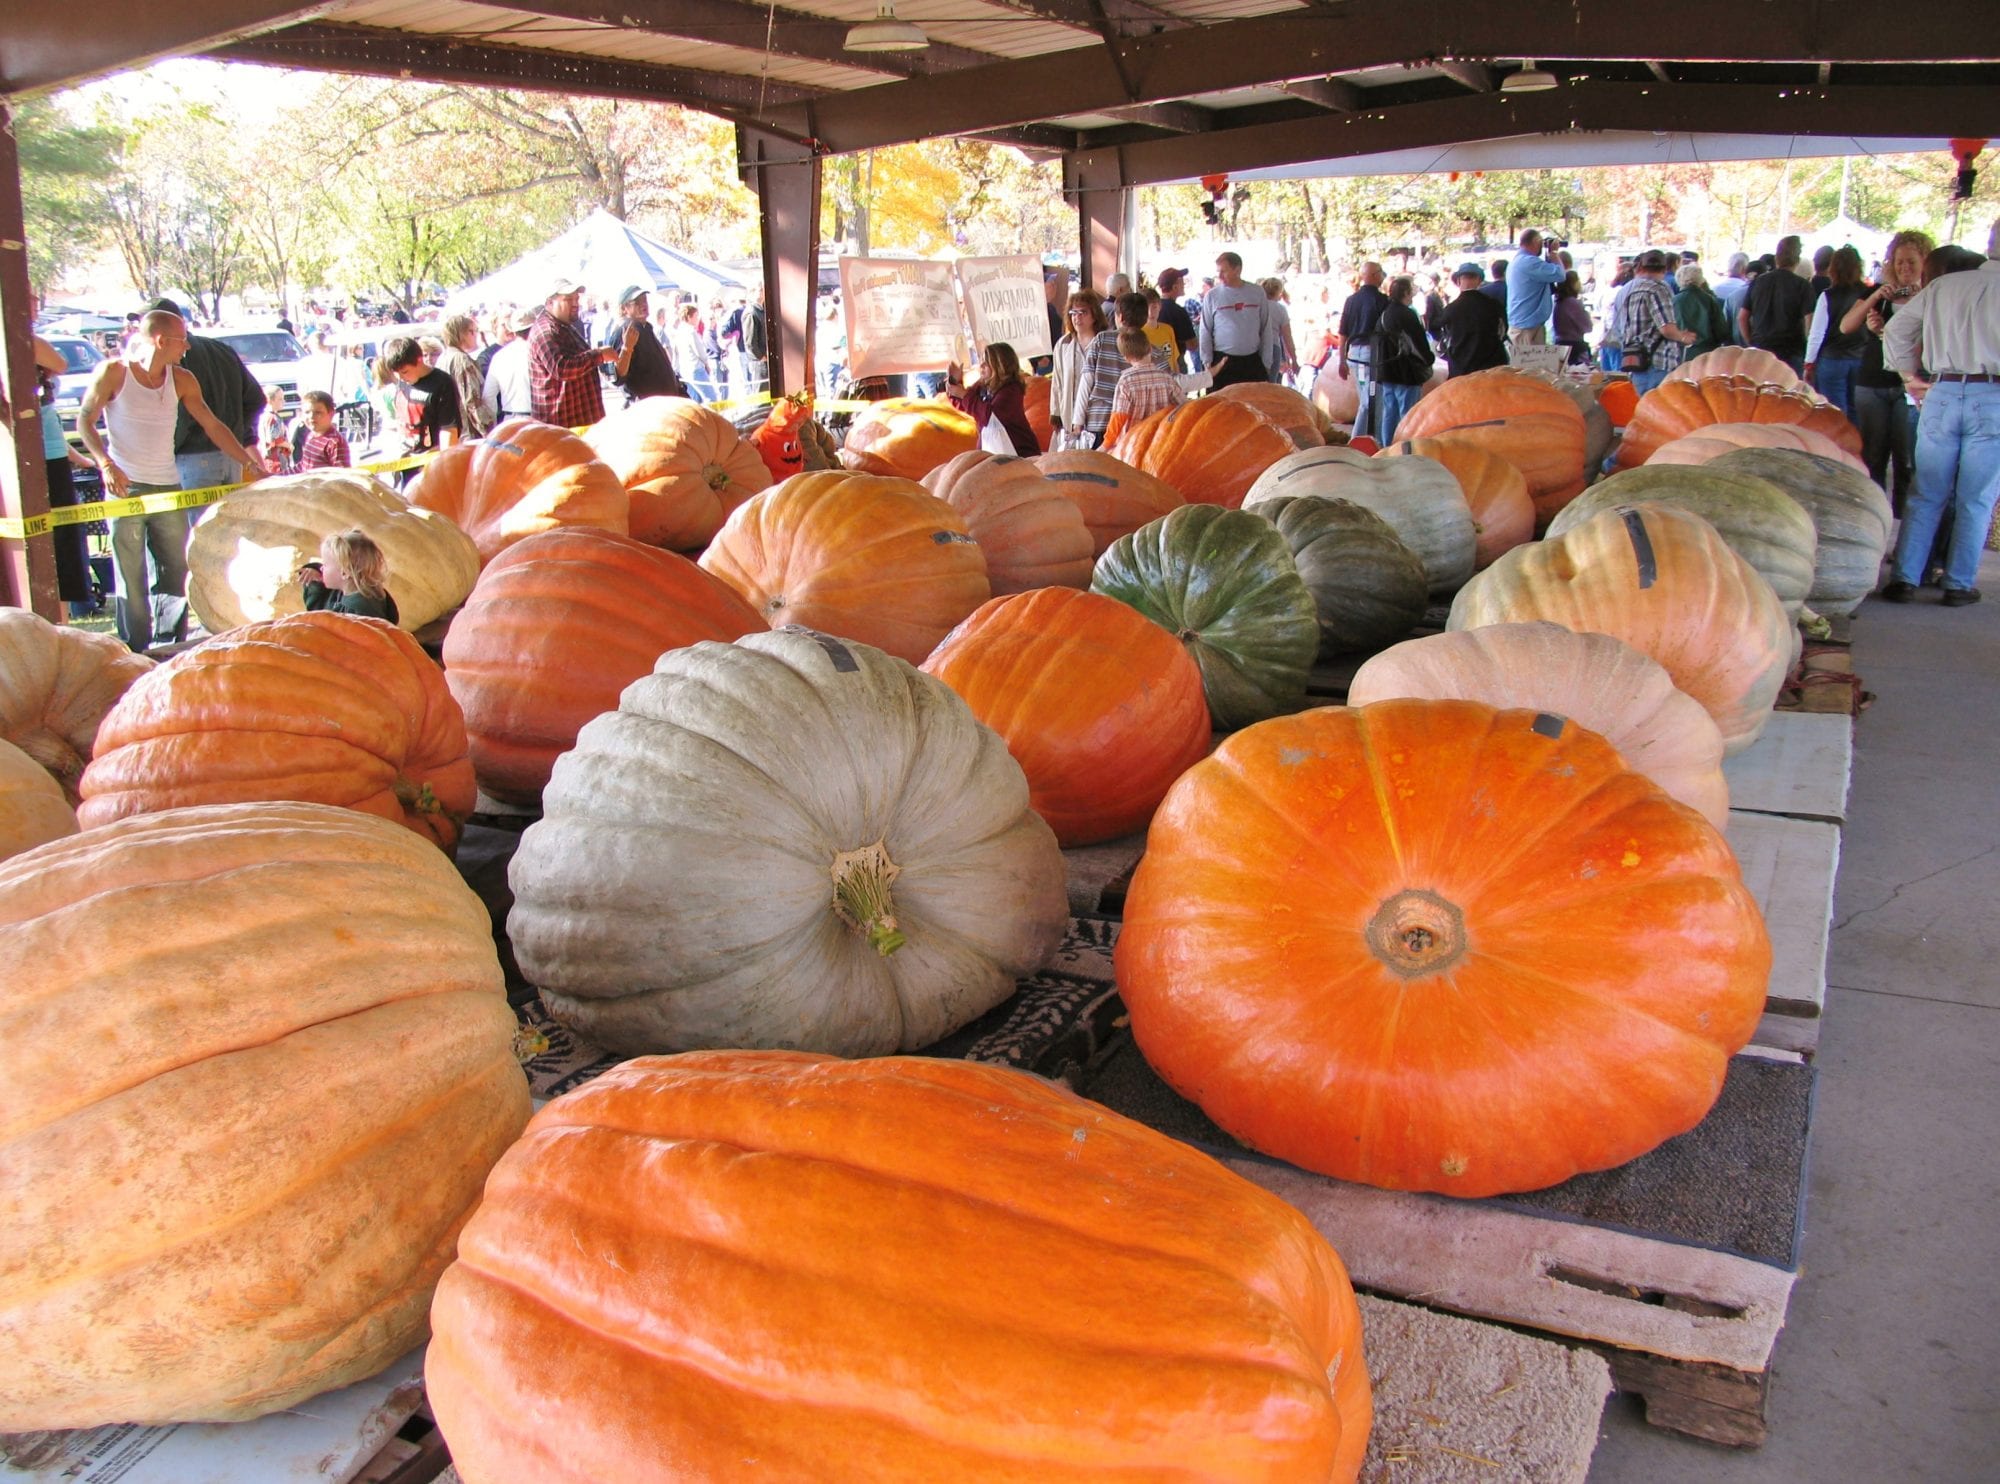 Nekoosa Giant Pumpkin Festival the Fall Season MidWest Farm